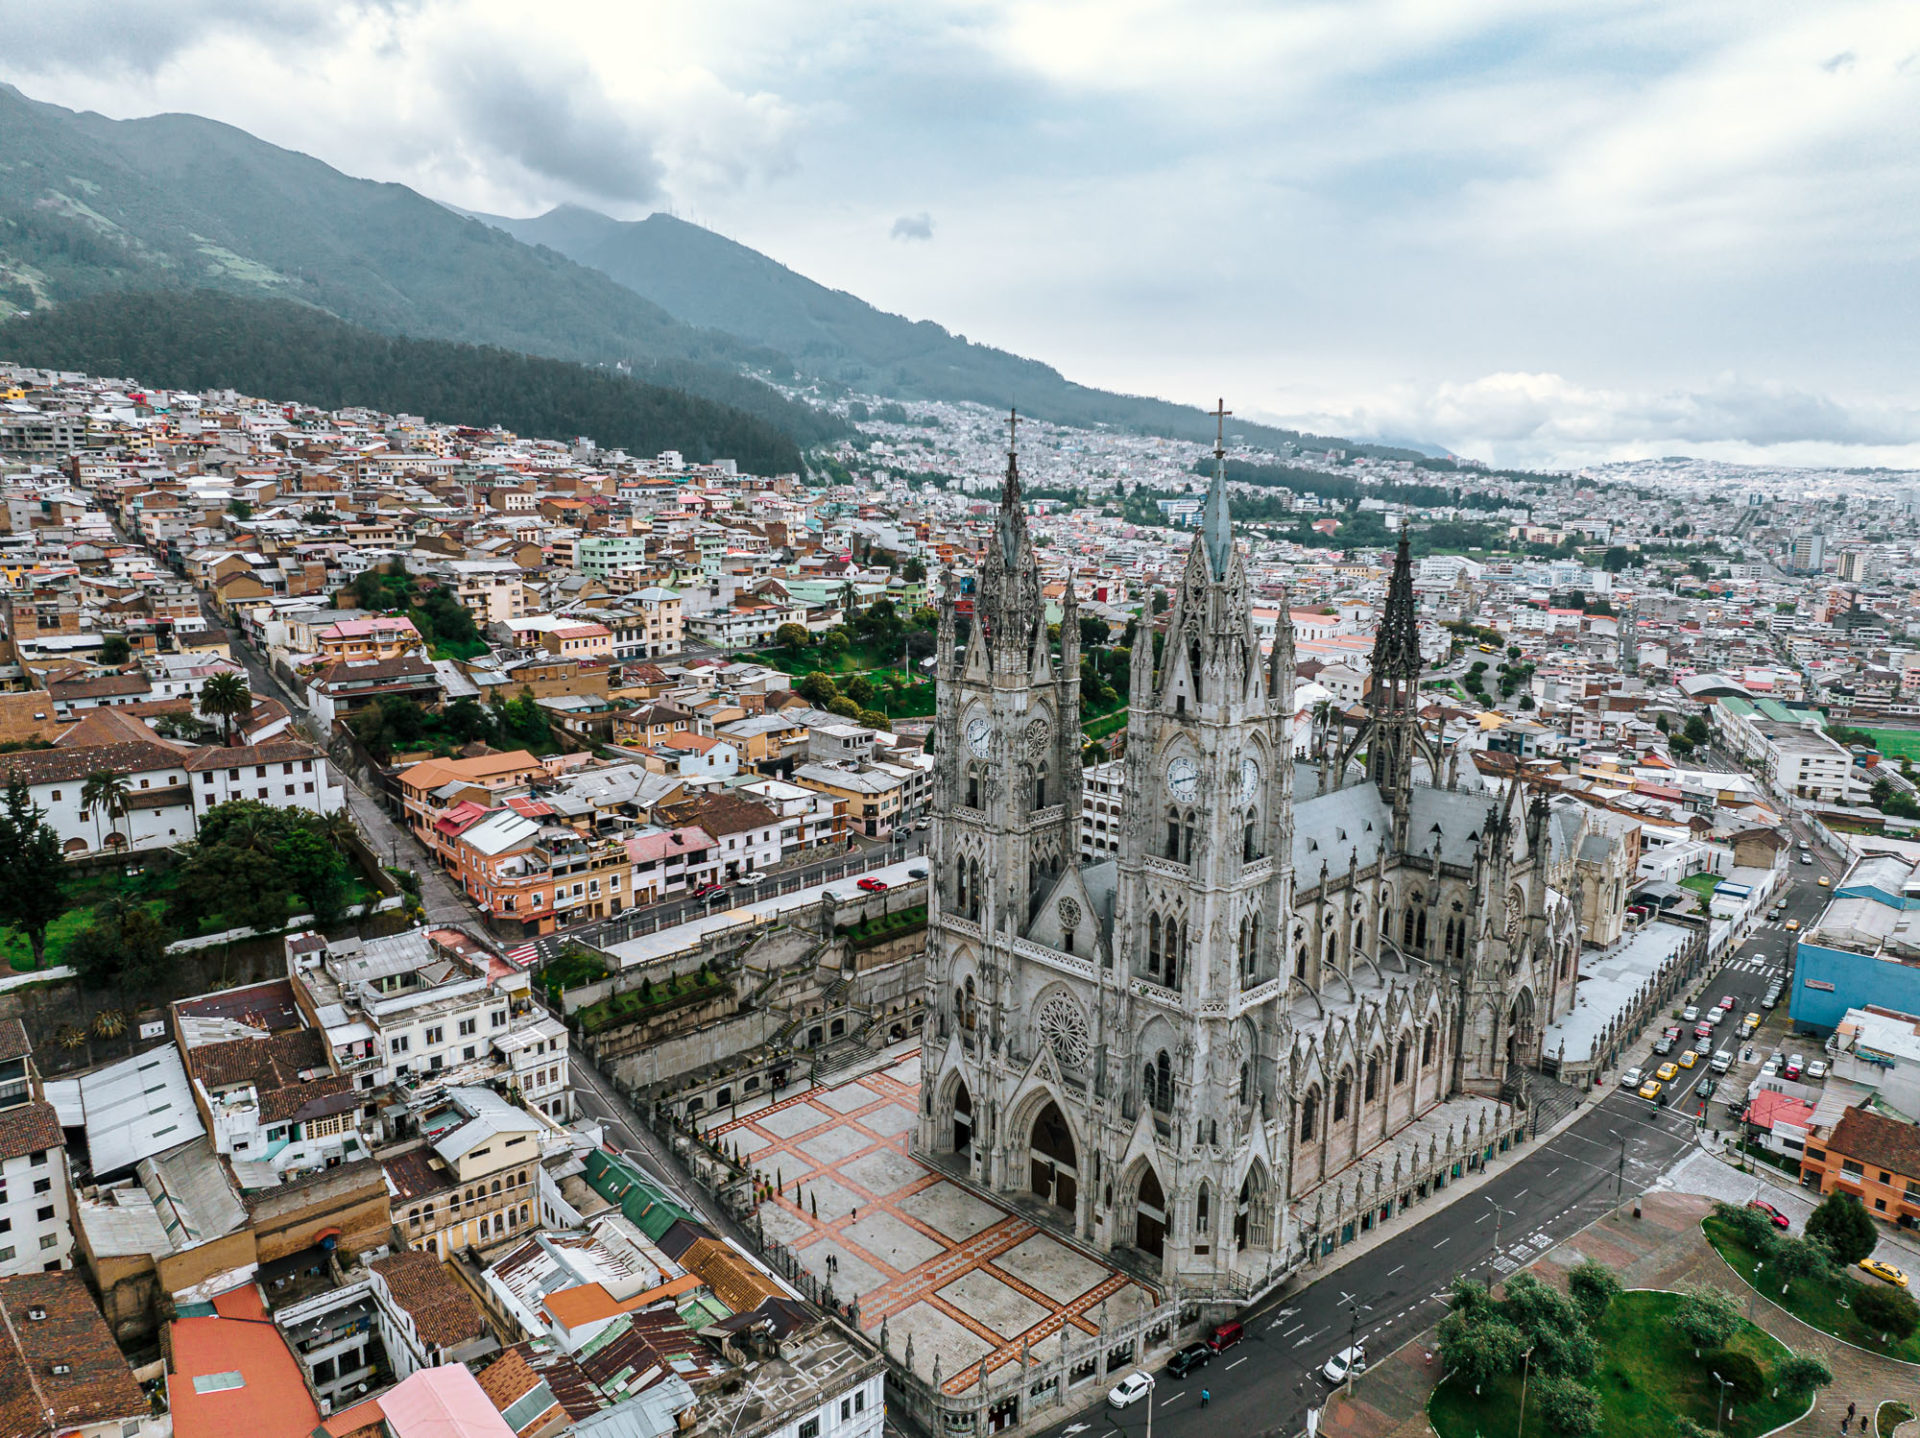 Basilica del Voto National Church: Famous places in Quito Ecuador